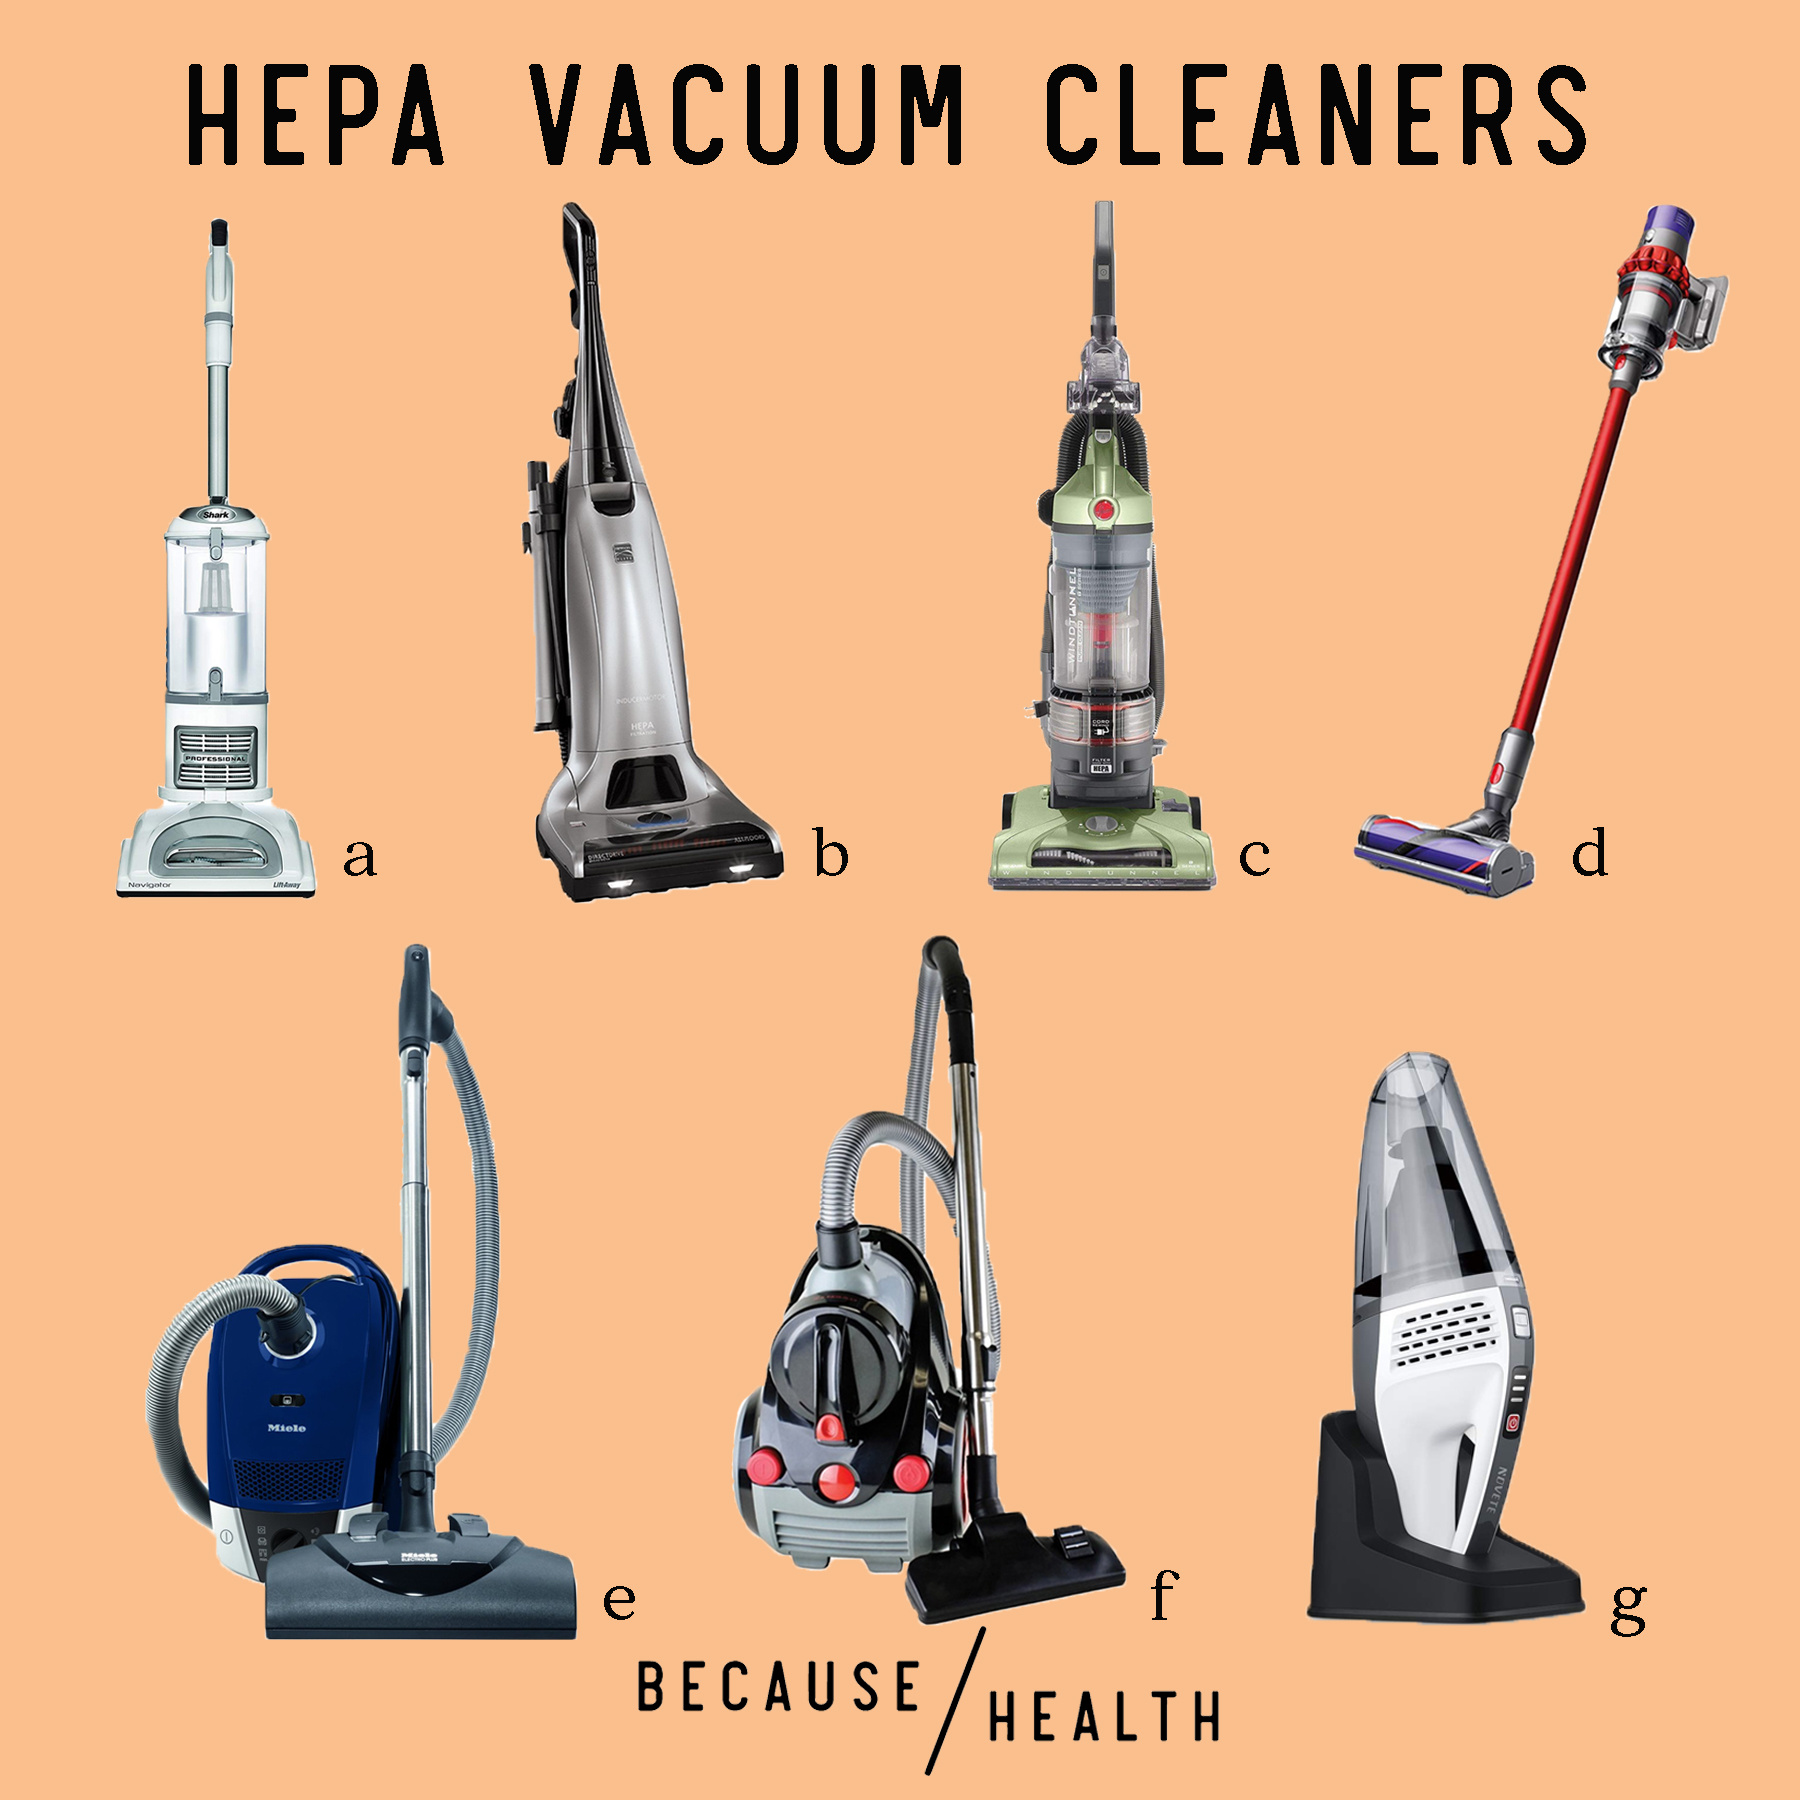 7 HEPA Filter Vacuums